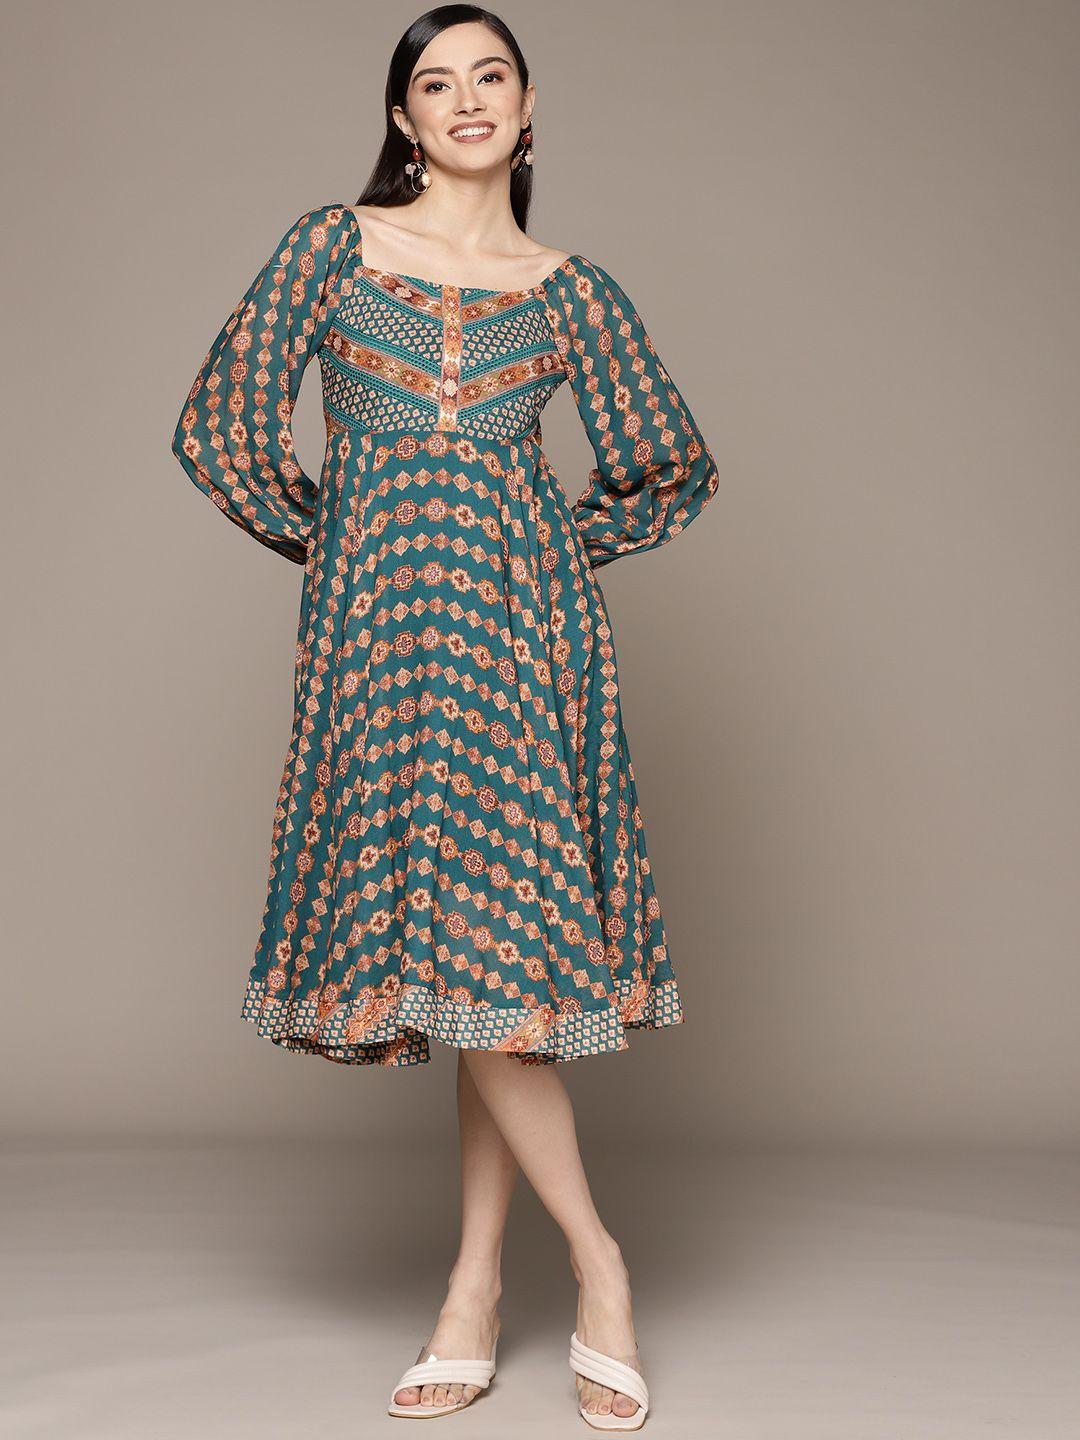 ritu kumar teal blue & beige ethnic motifs printed a-line midi dress